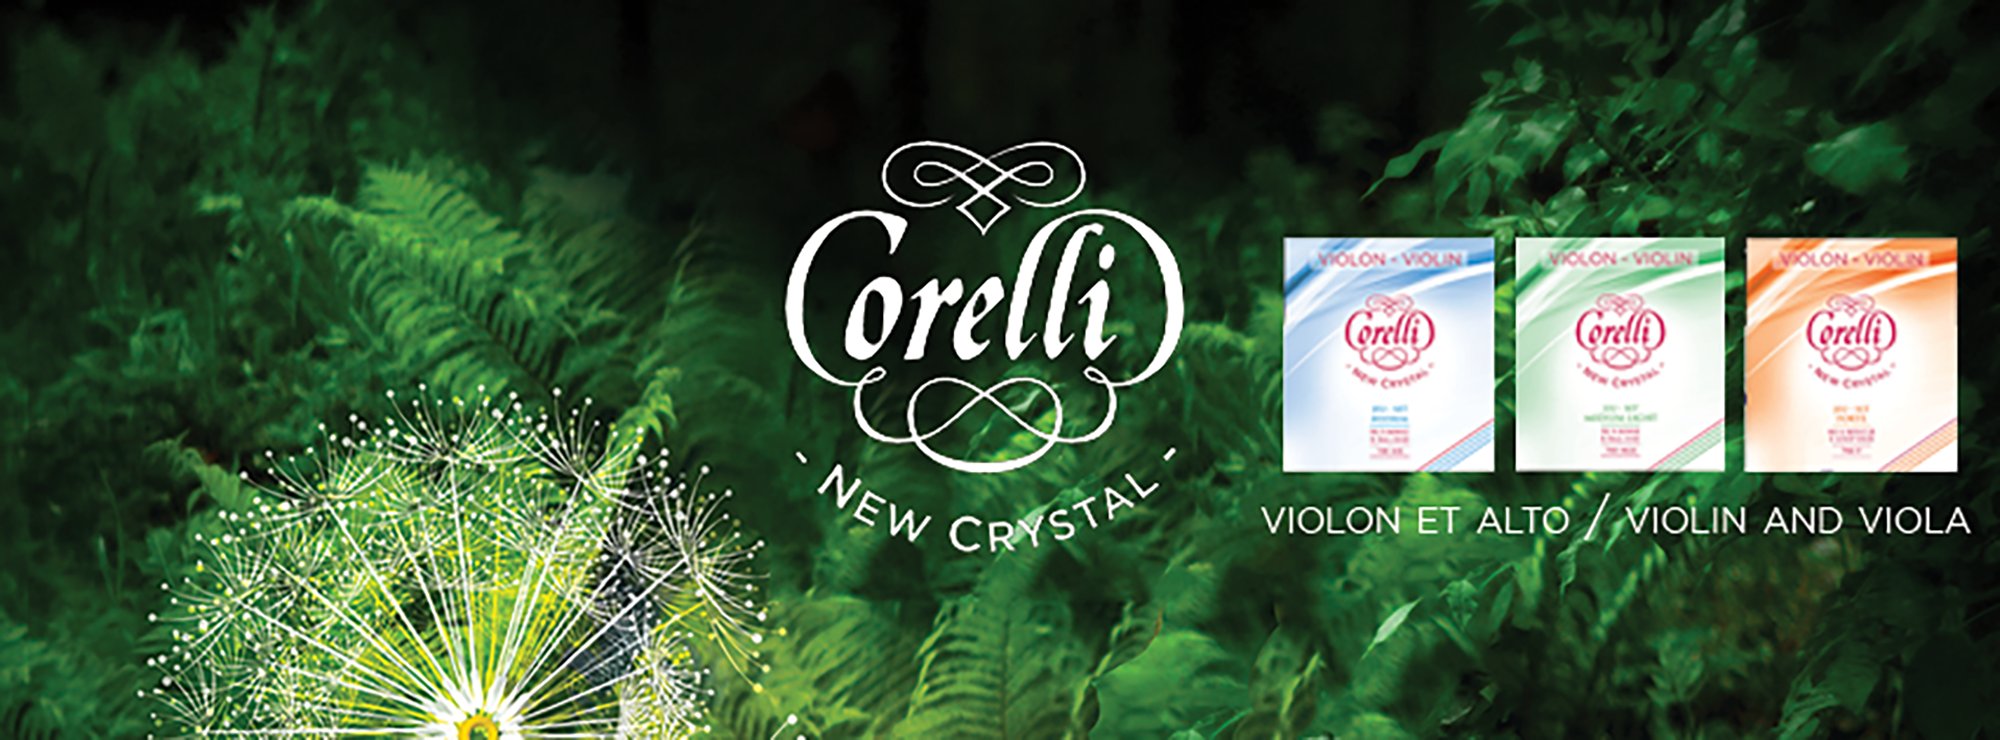 Savarez Corelli New Crystal Violin Strings